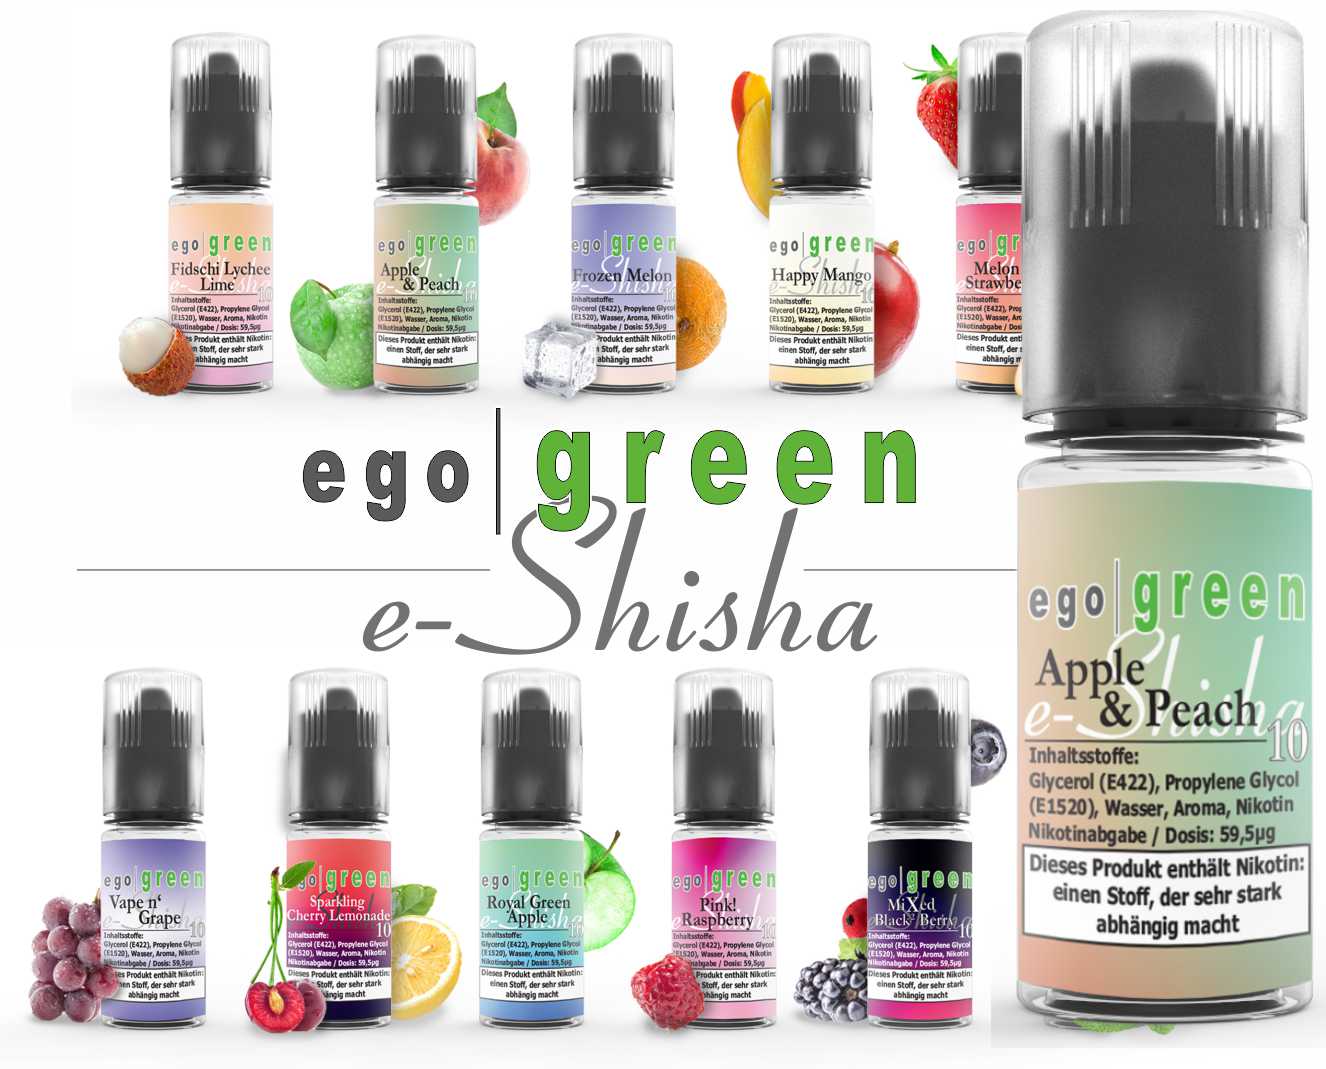 egogreen Apple & Peach e-Shisha Nikotinsalz Liquid im Online Shop kaufen